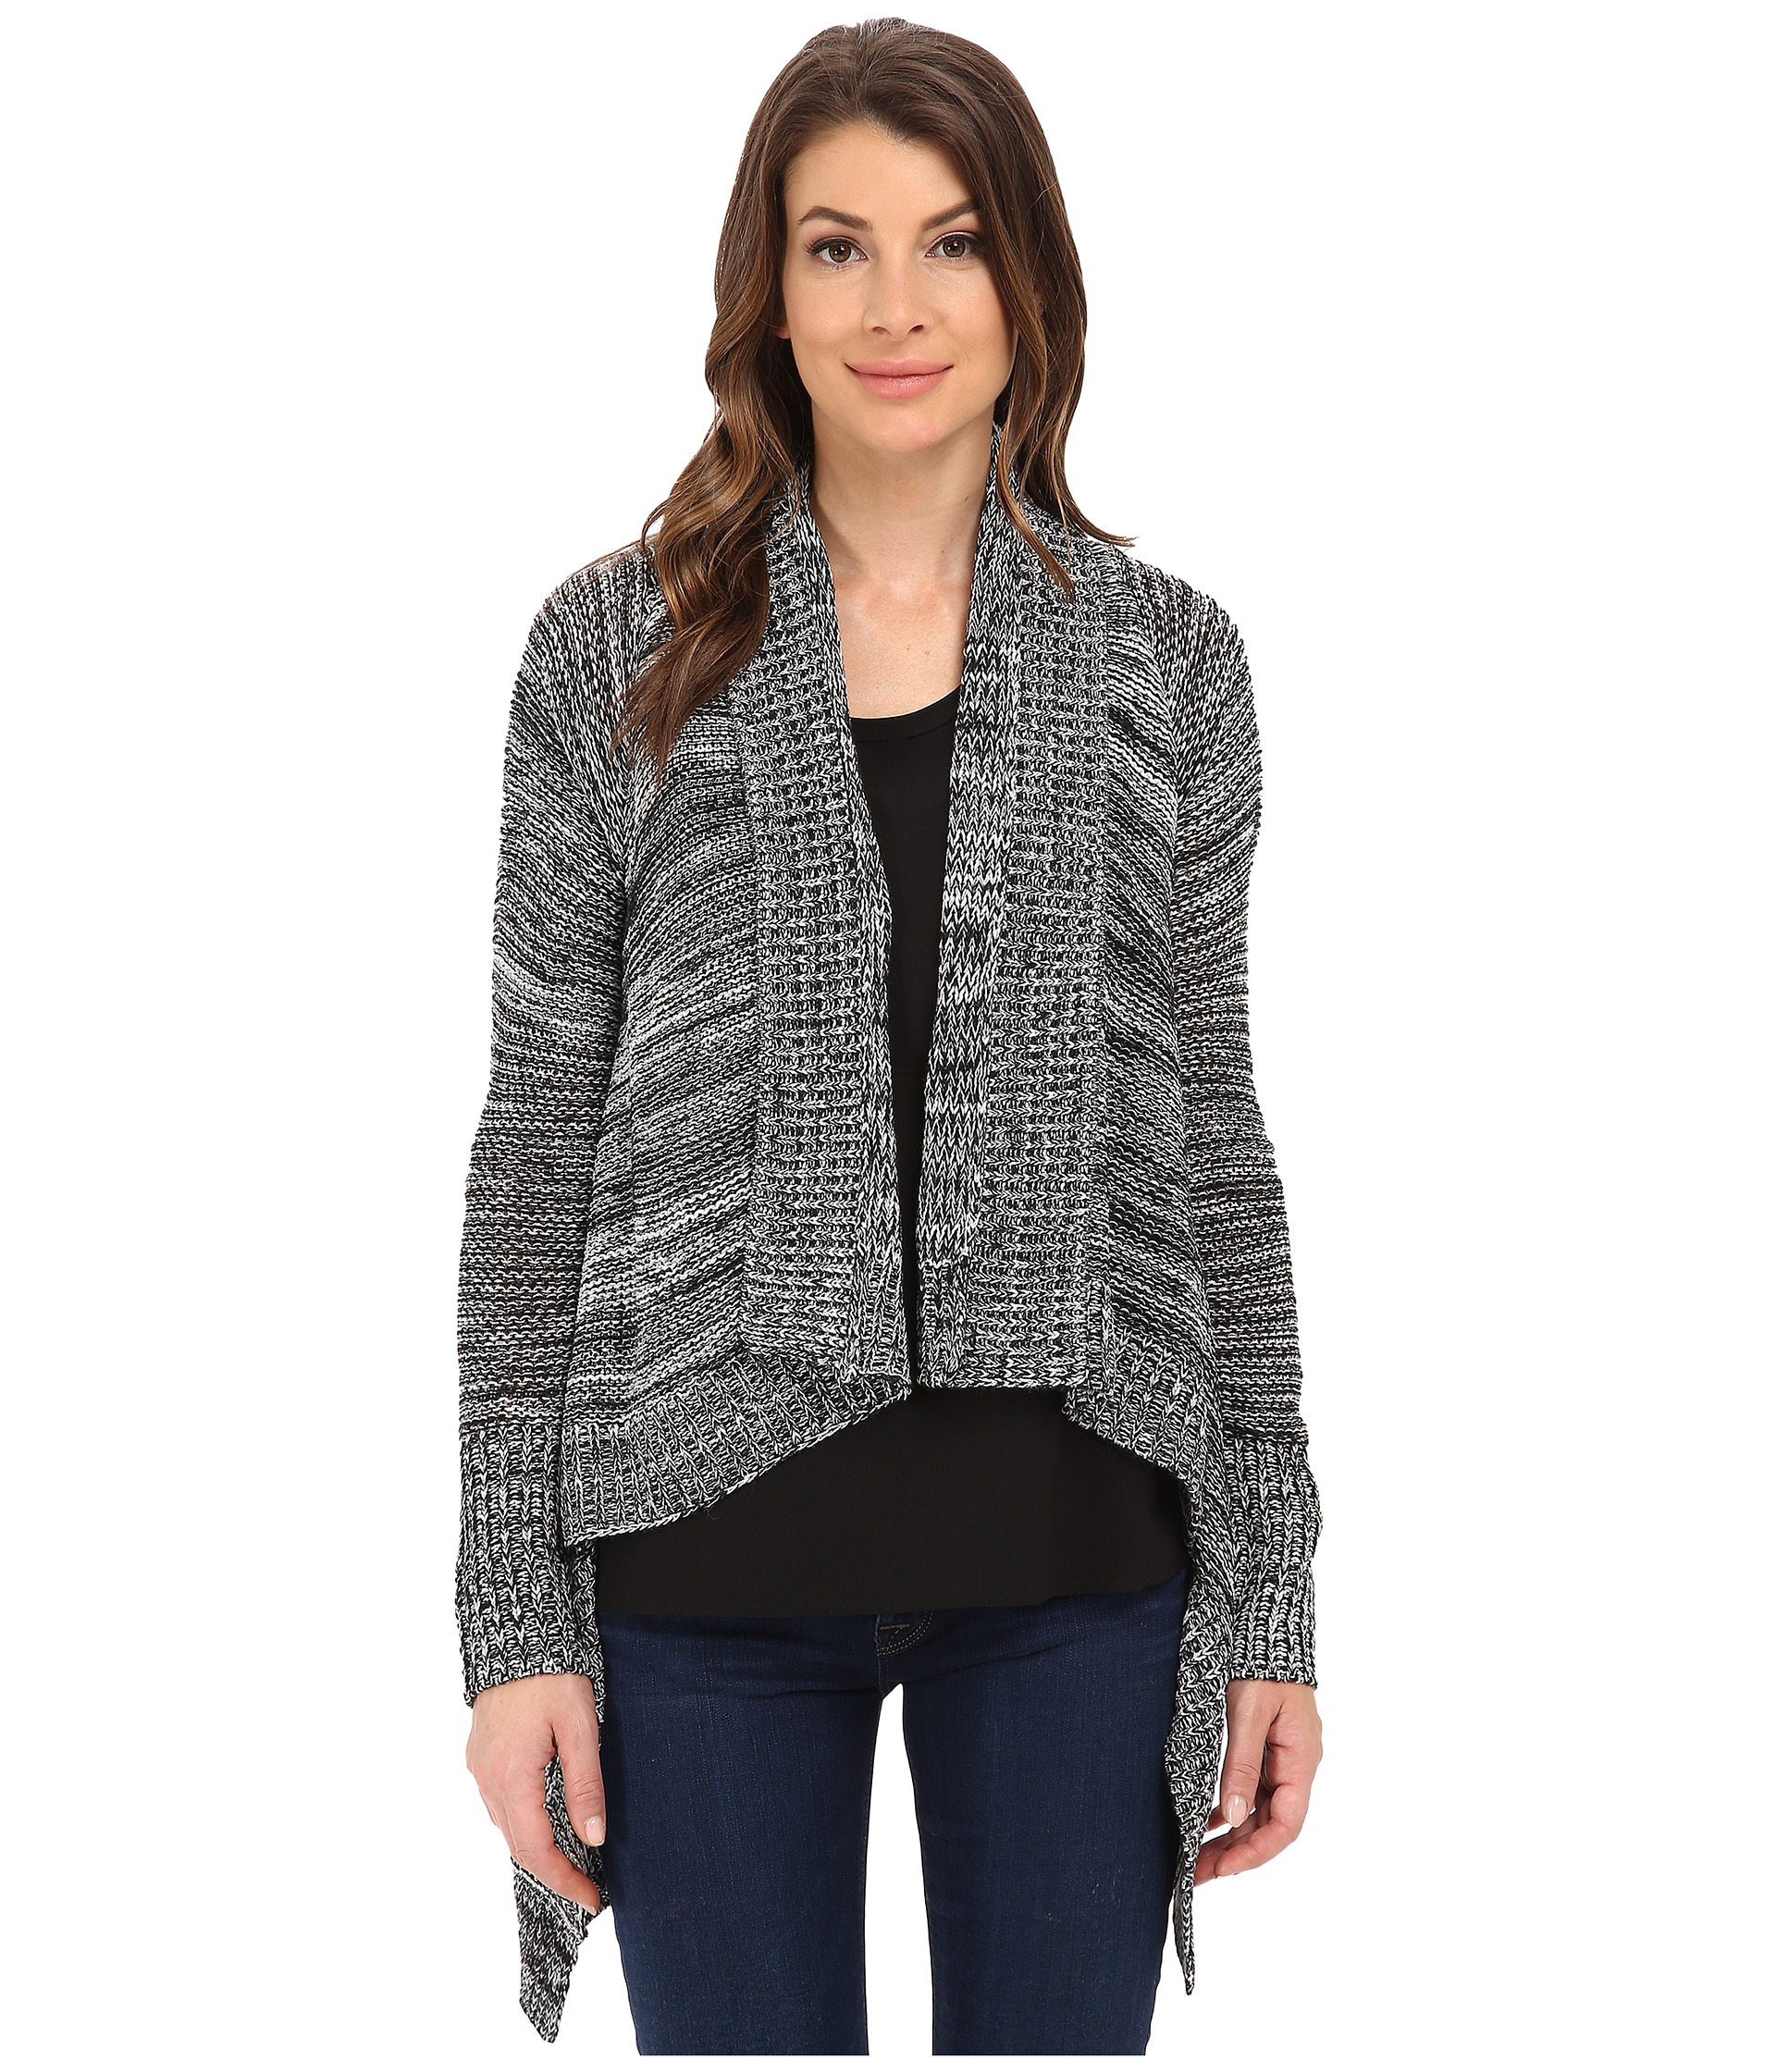 Lyst - Jack Bb Dakota Tedra Marled Cardigan Sweater in Gray